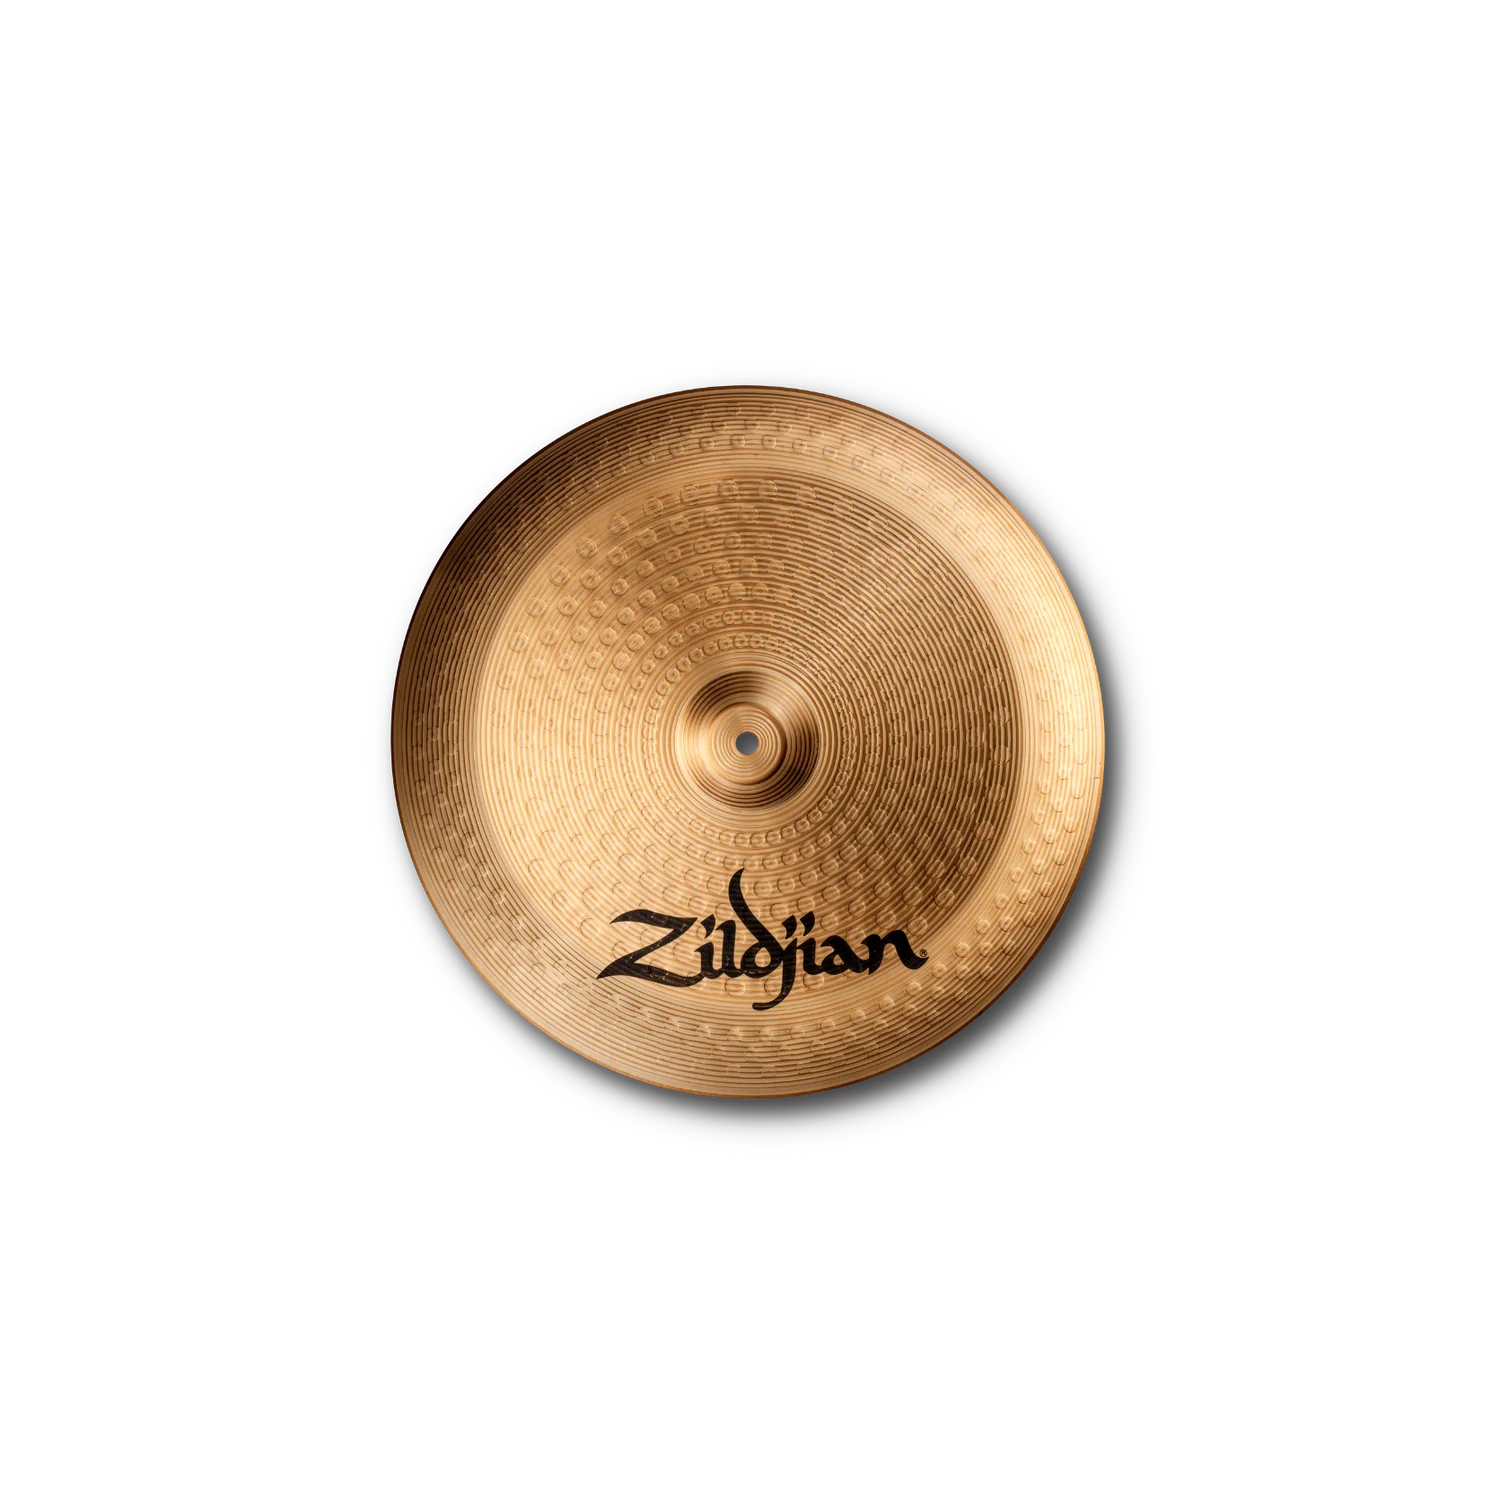 Zildjian I Series 16" China Cymbal